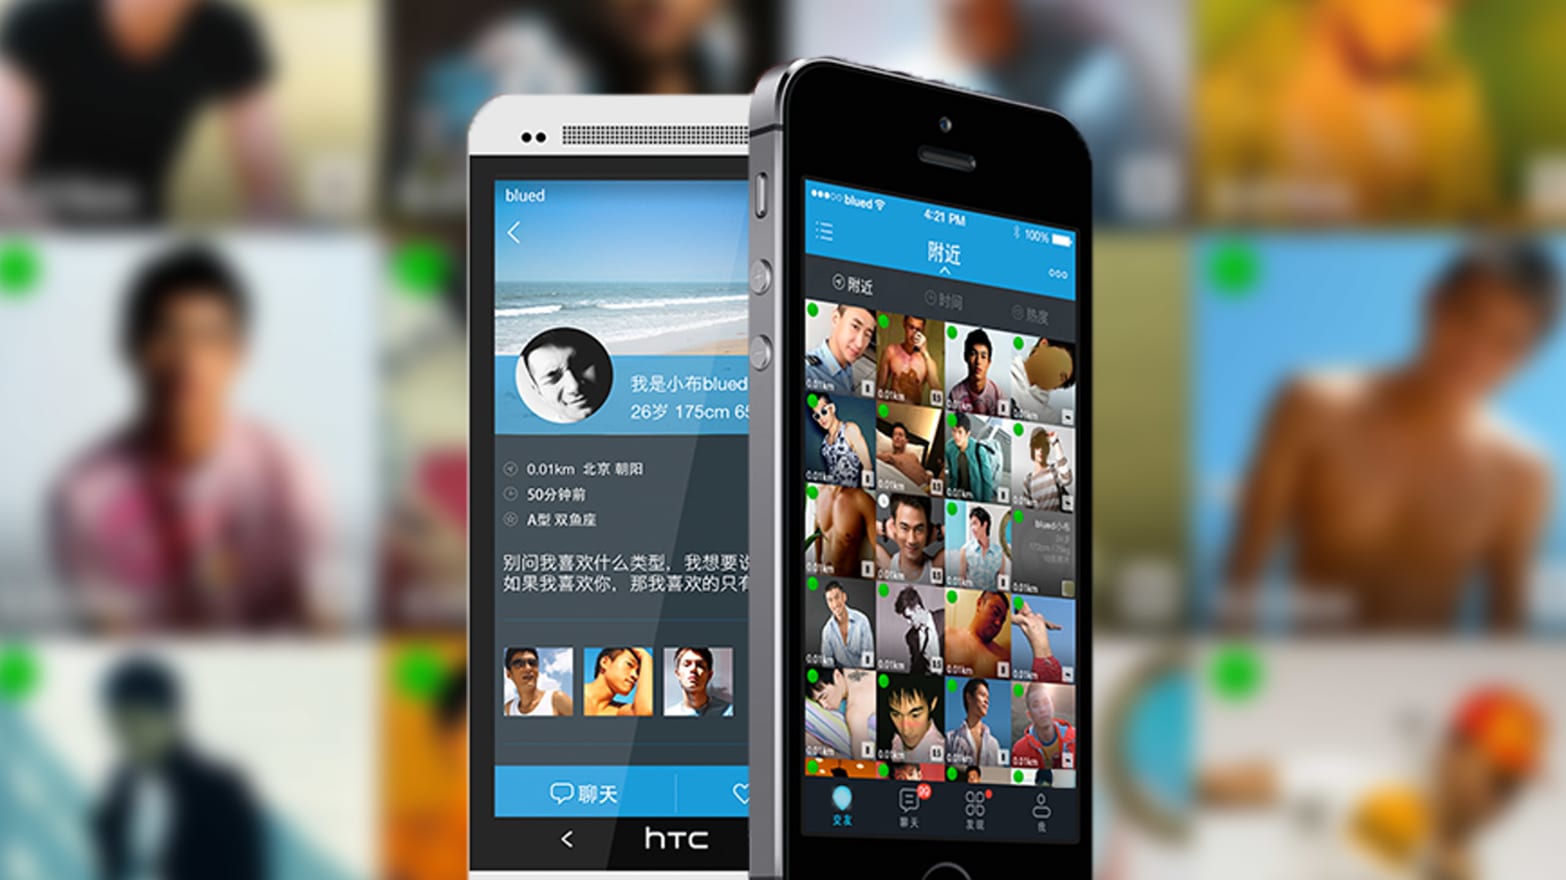 Kina dating app Momo